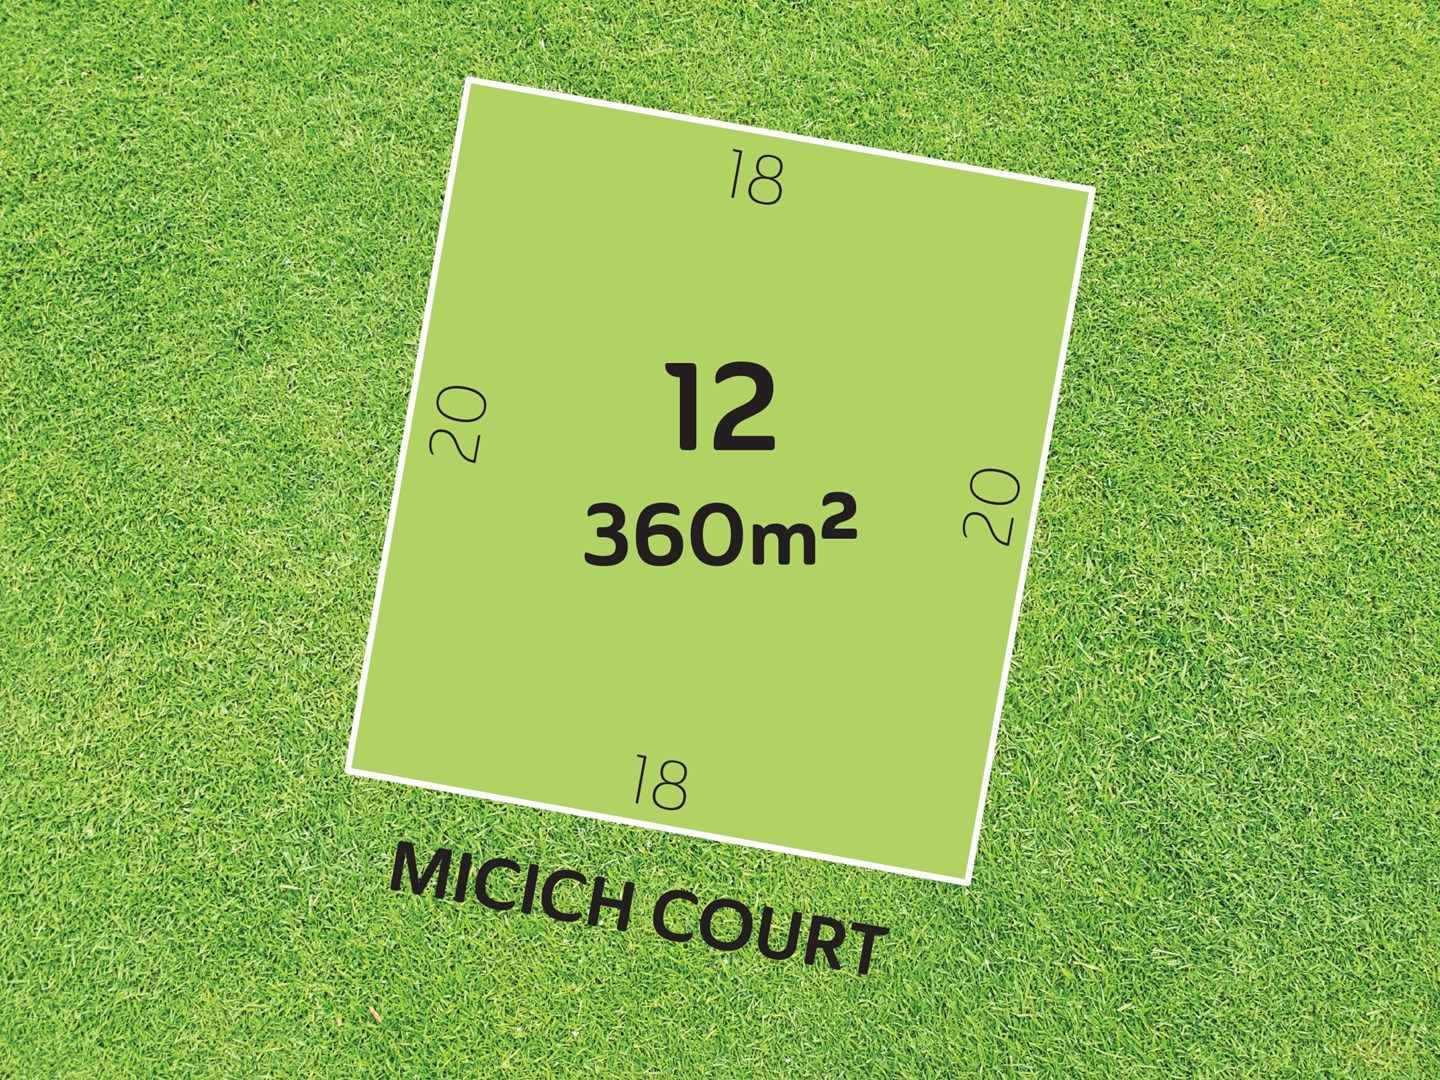 12 Micich Court, Alfredton VIC 3350, Image 0